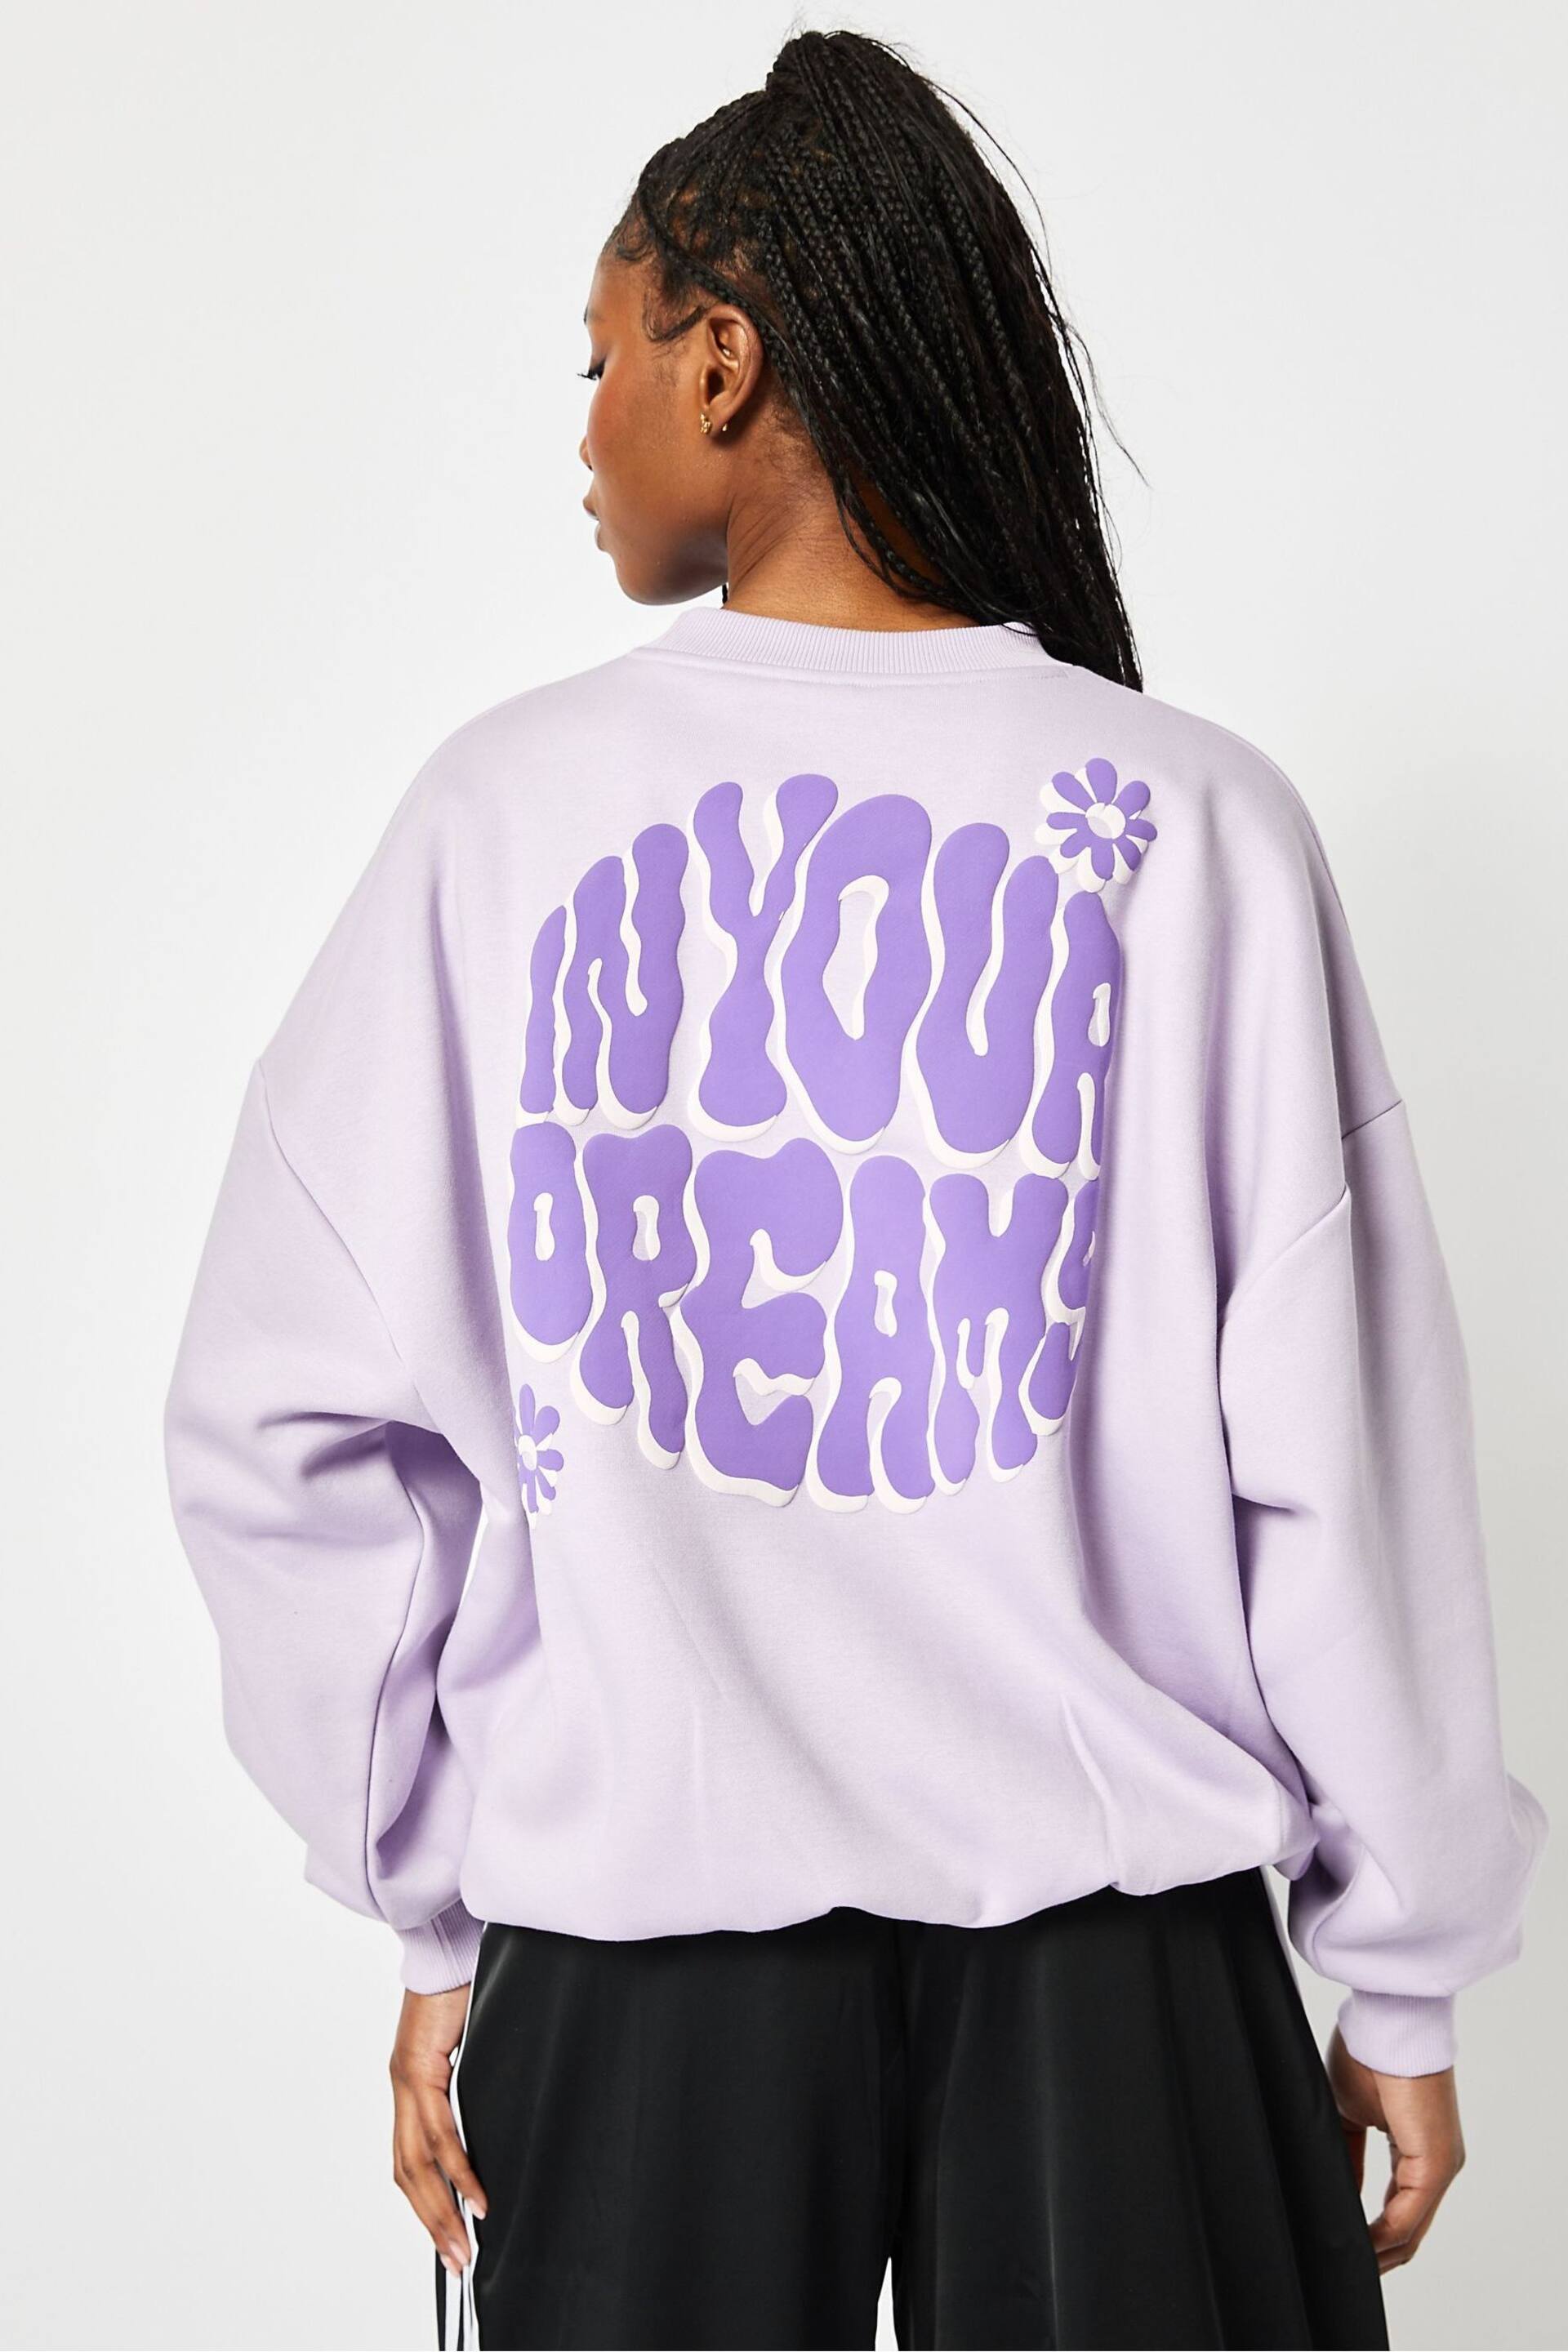 Skinnydip Oversized Purple In Your Dreams Sweatshirt - Image 1 of 4